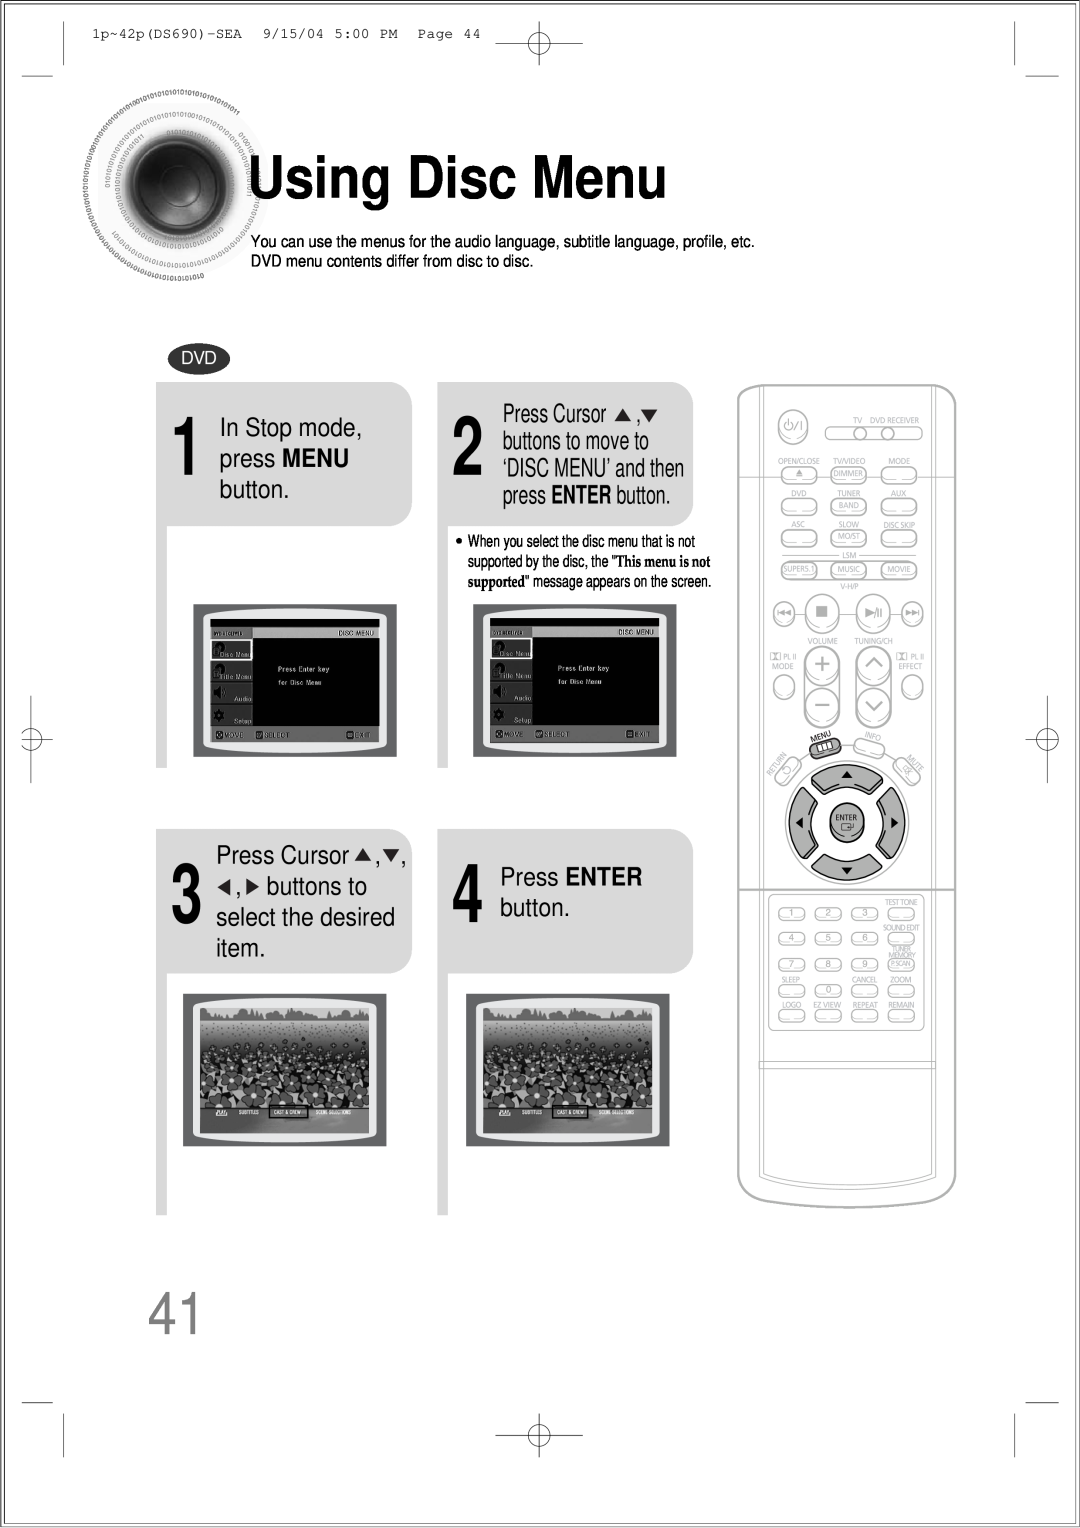 Samsung HT-DS690 UsingDisc Menu, buttons to, item, Press ENTER, Press Cursor, In Stop mode, press MENU button 